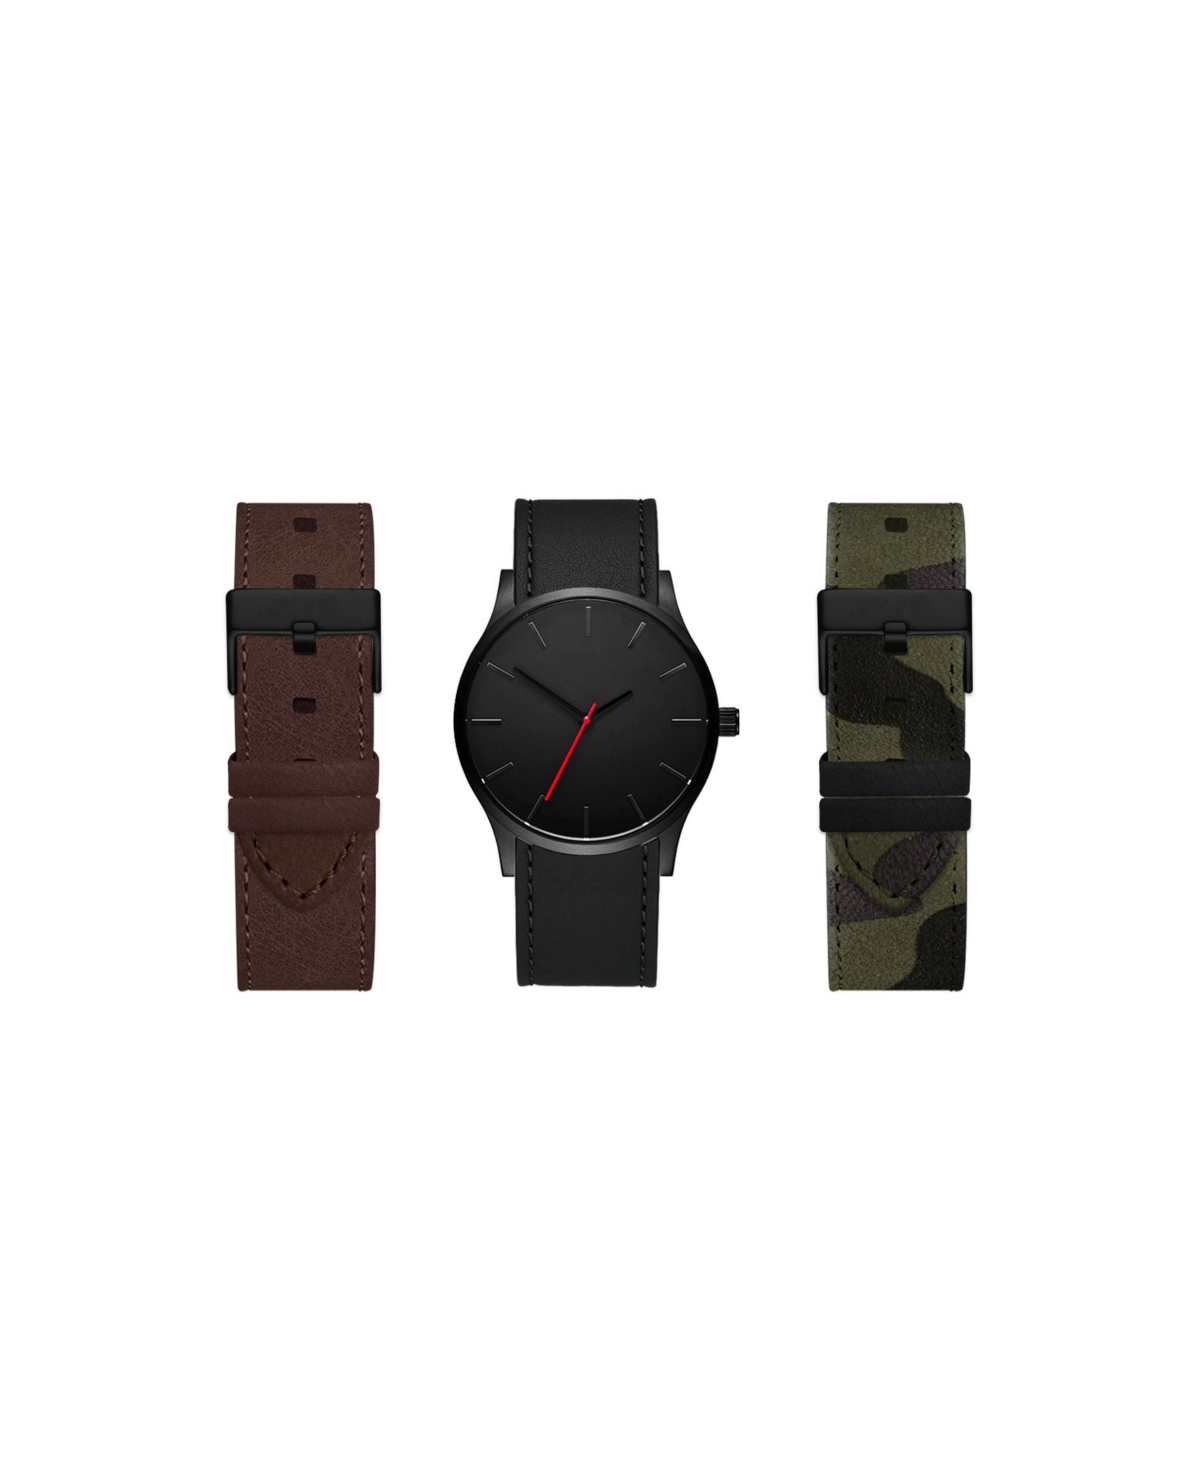 American Exchange Men's Quartz Dial Black Leather Strap Watch, 42mm with Interchangeable Straps, Set of 3